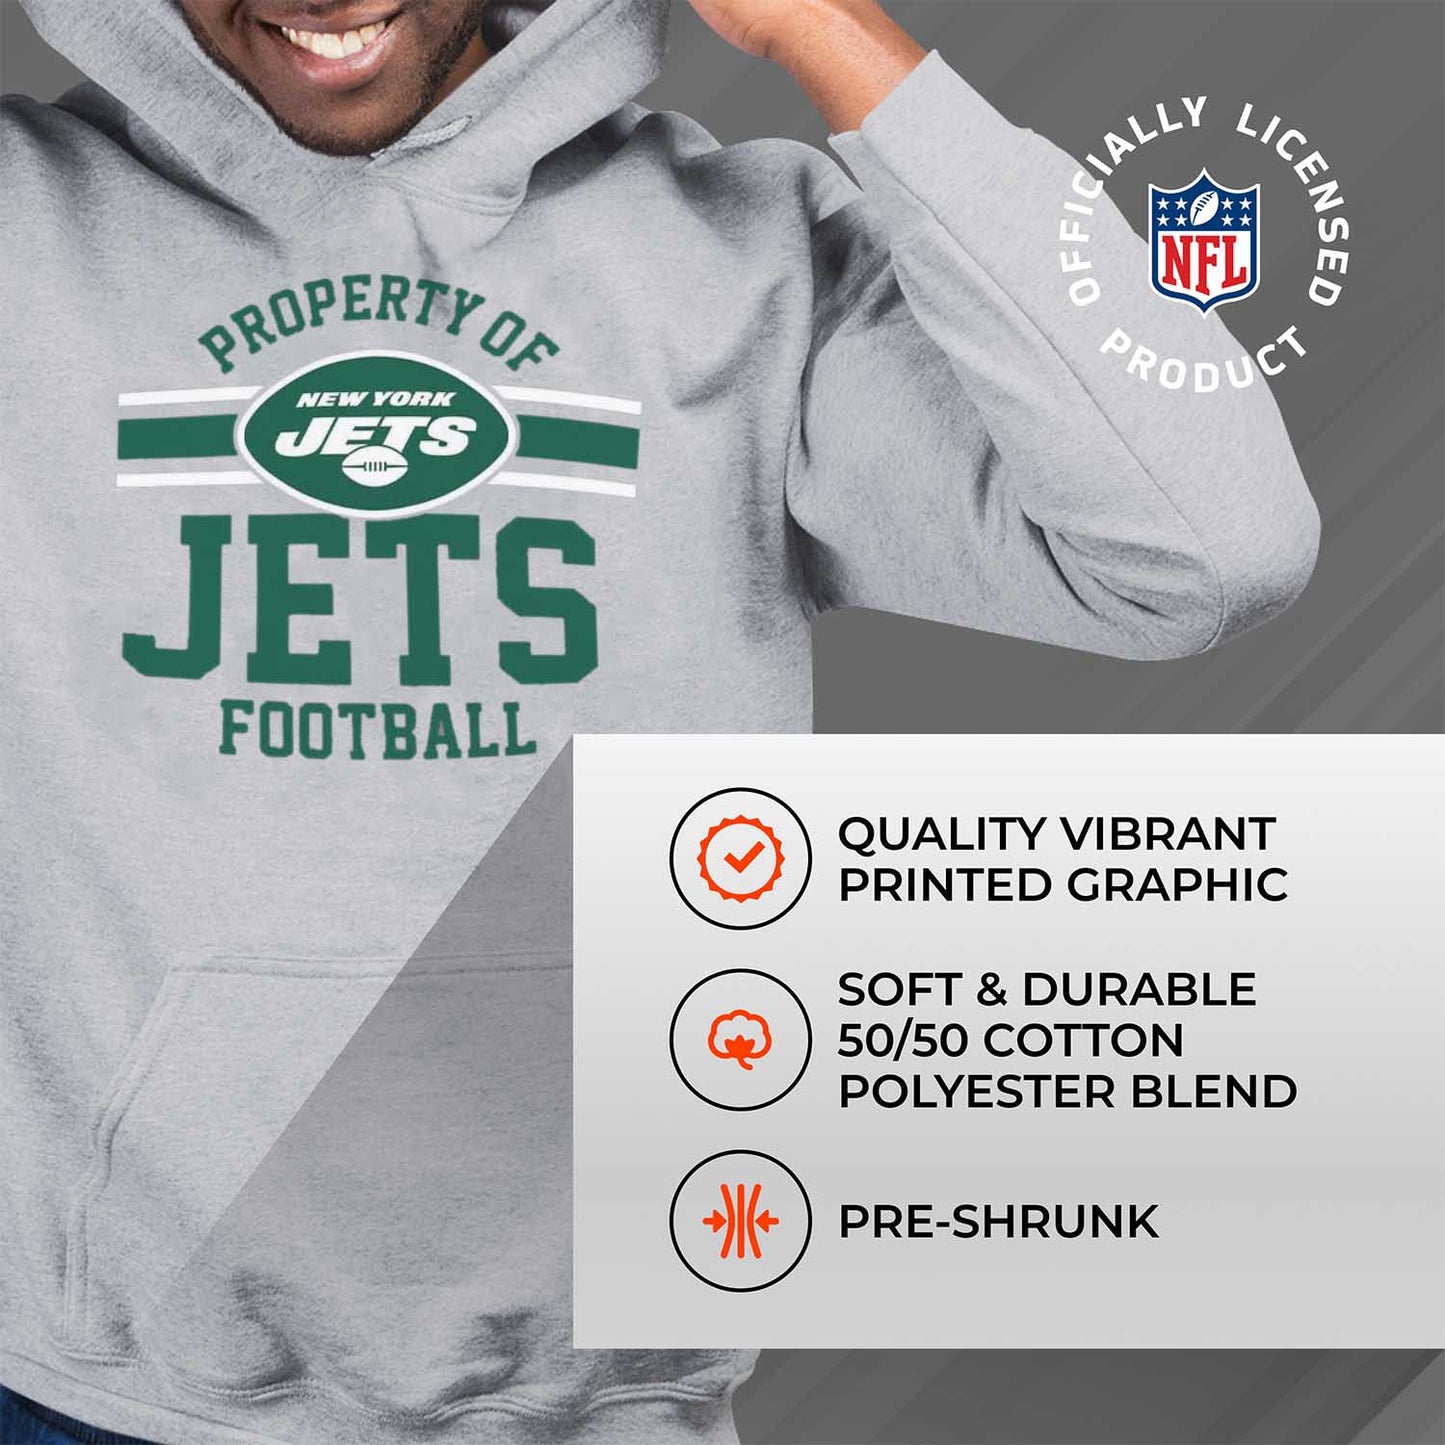 New York Jets NFL Adult Property Of Hooded Sweatshirt - Sport Gray